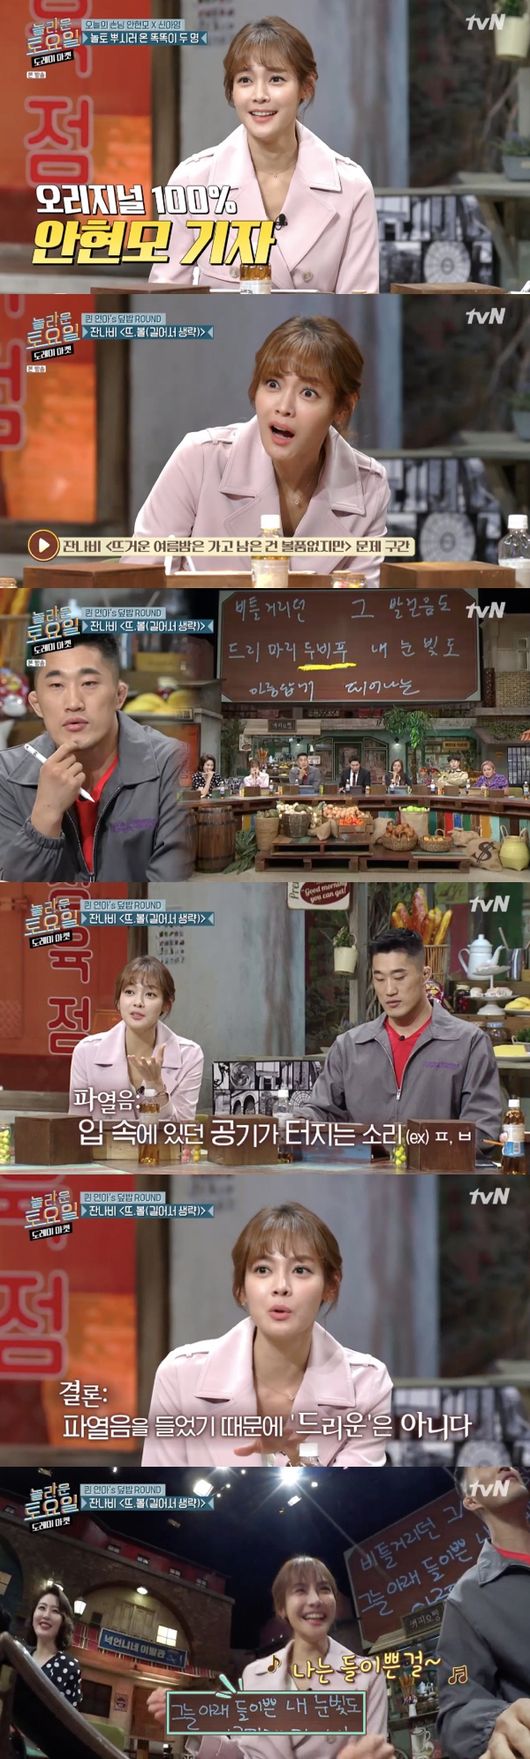 tvN '도레미마켓' 방송화면 캡처